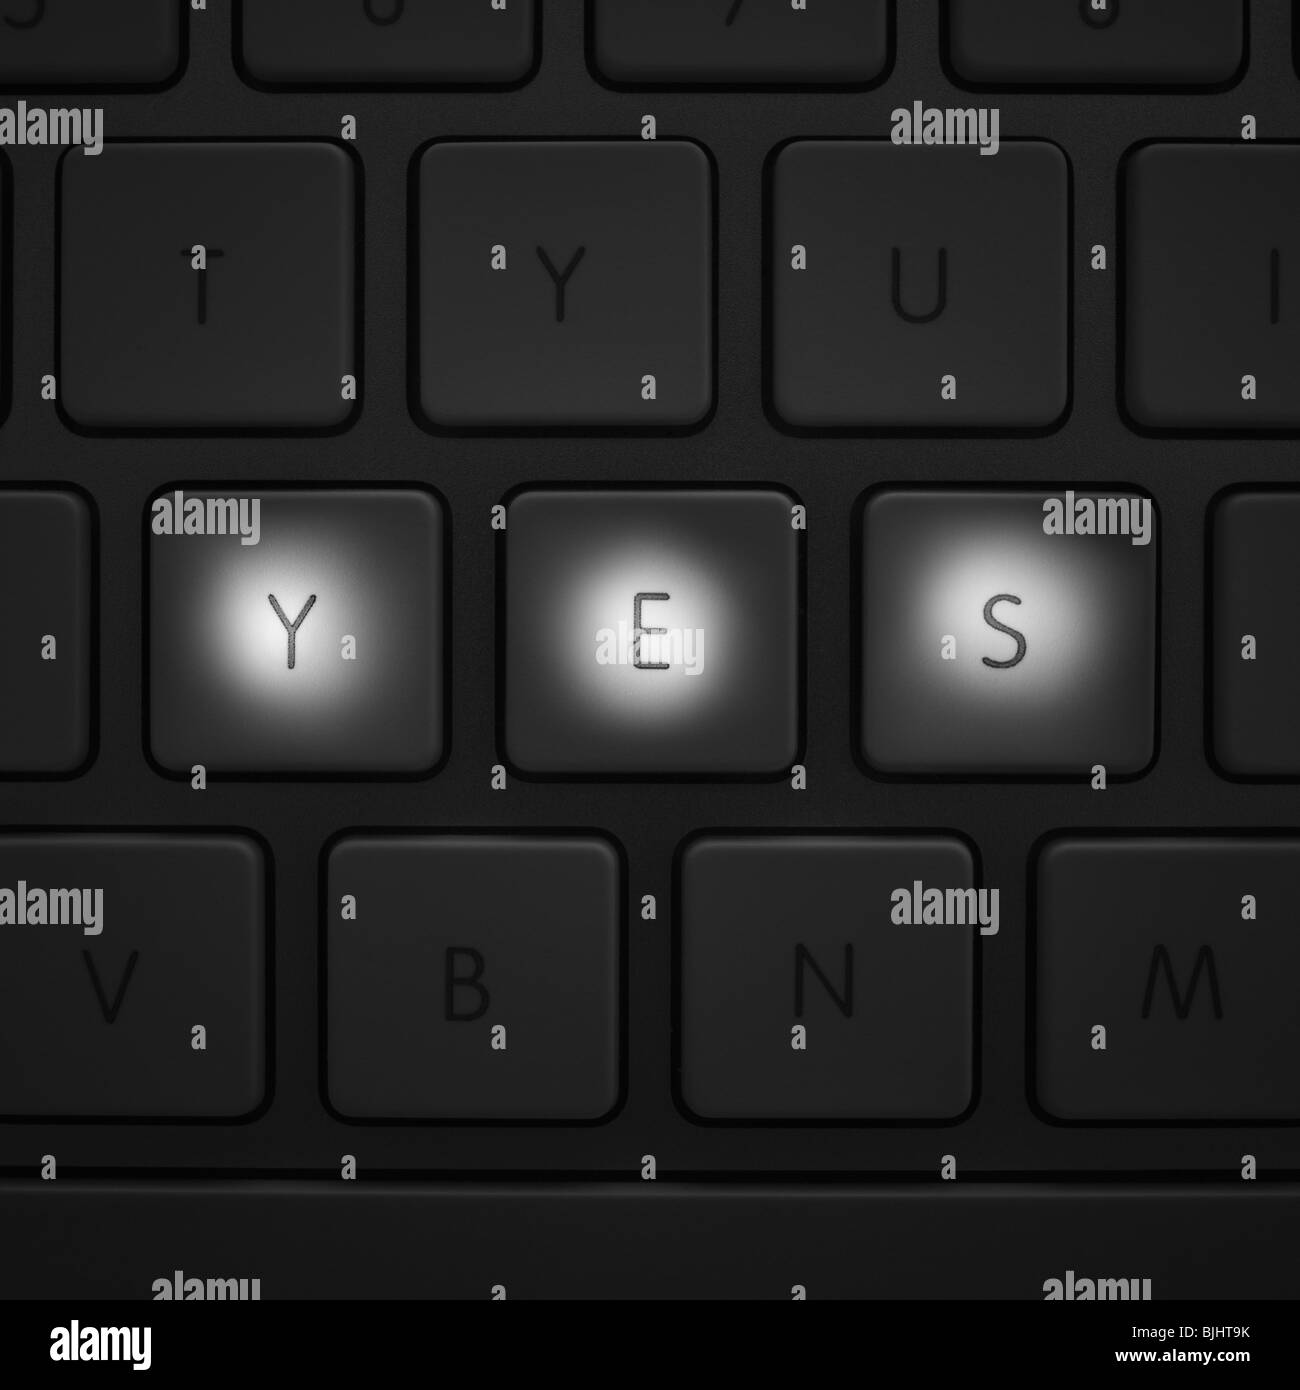 Keys on keyboard Stock Photo